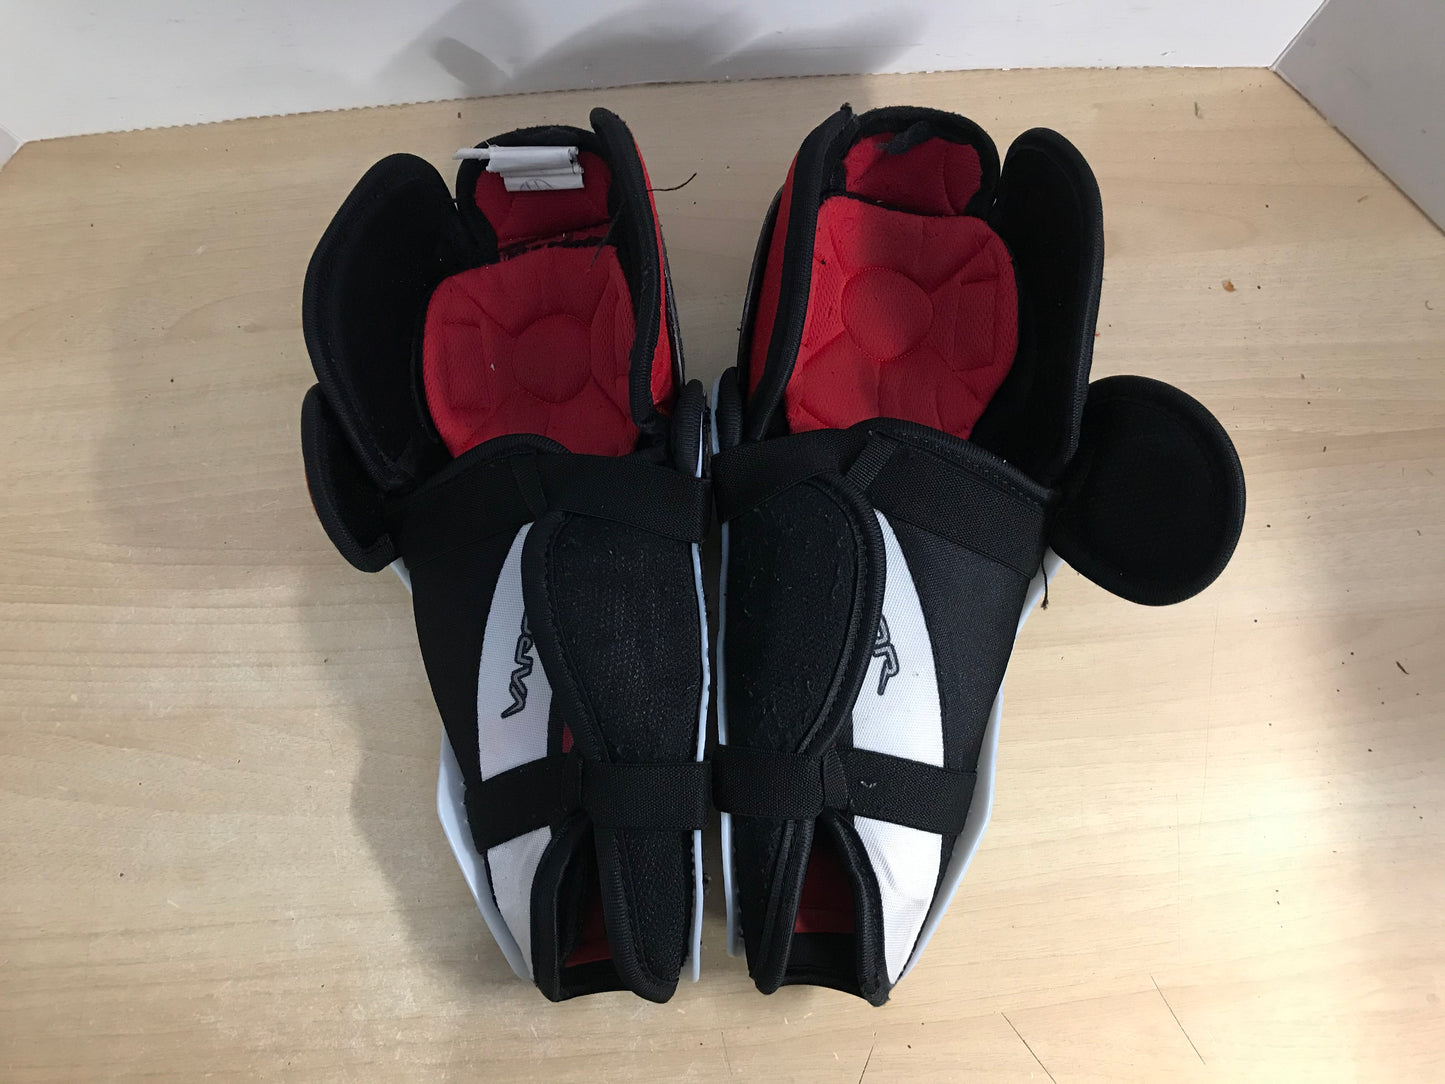 Hockey Shin Pad Child Size 11 inch Bauer Vapor X5.0 Minor Wear Black Red White